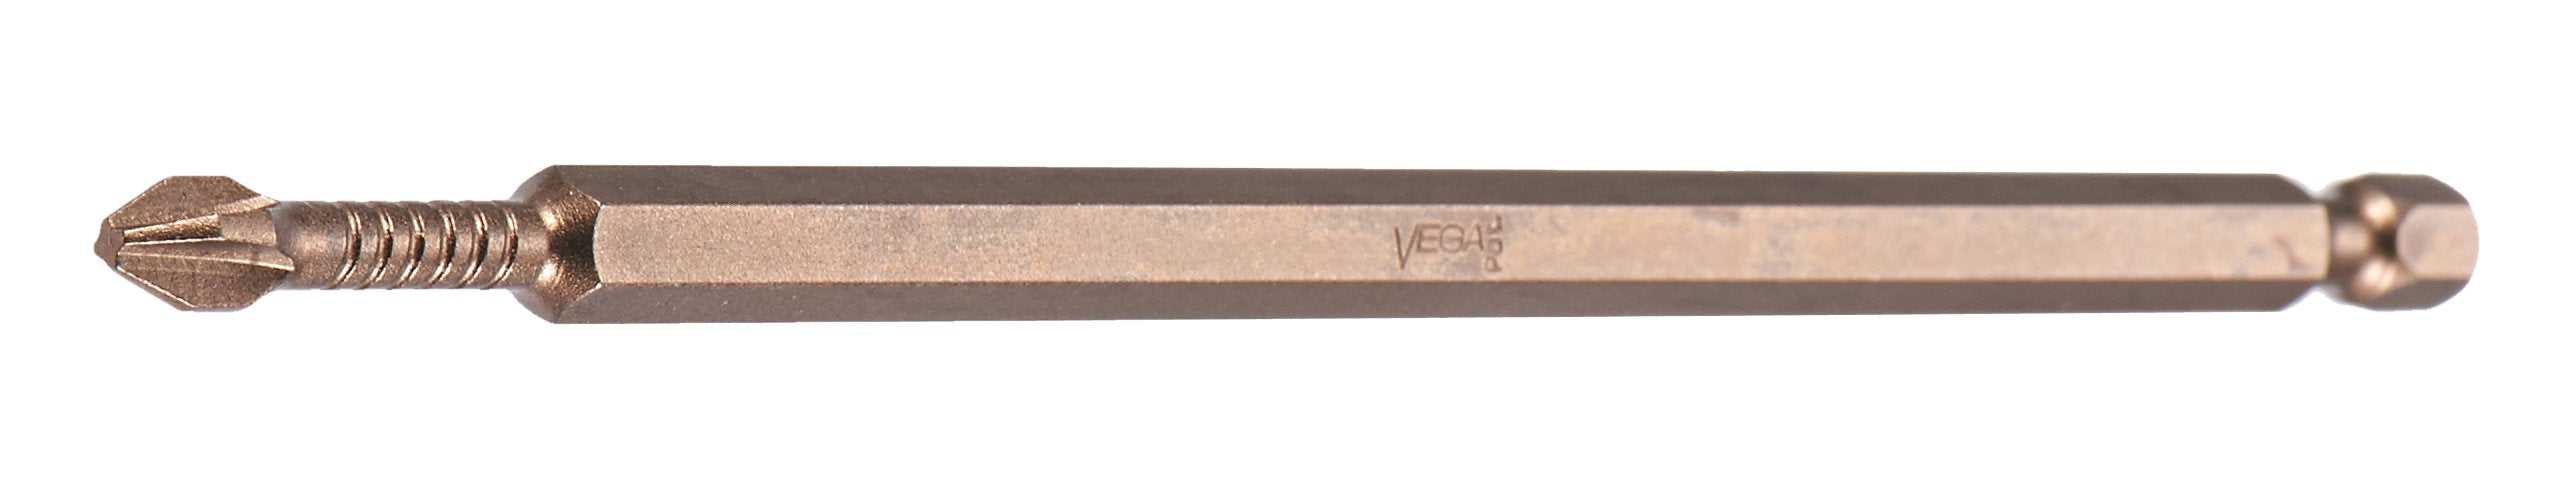 VEGA Industries #3 Phillips Impact Driver Bits. Professional Grade Impactech Impact Grade #3 Phillip 6 inch Extra Long Bits. (Pack of 3) P1150P3A-3 #82